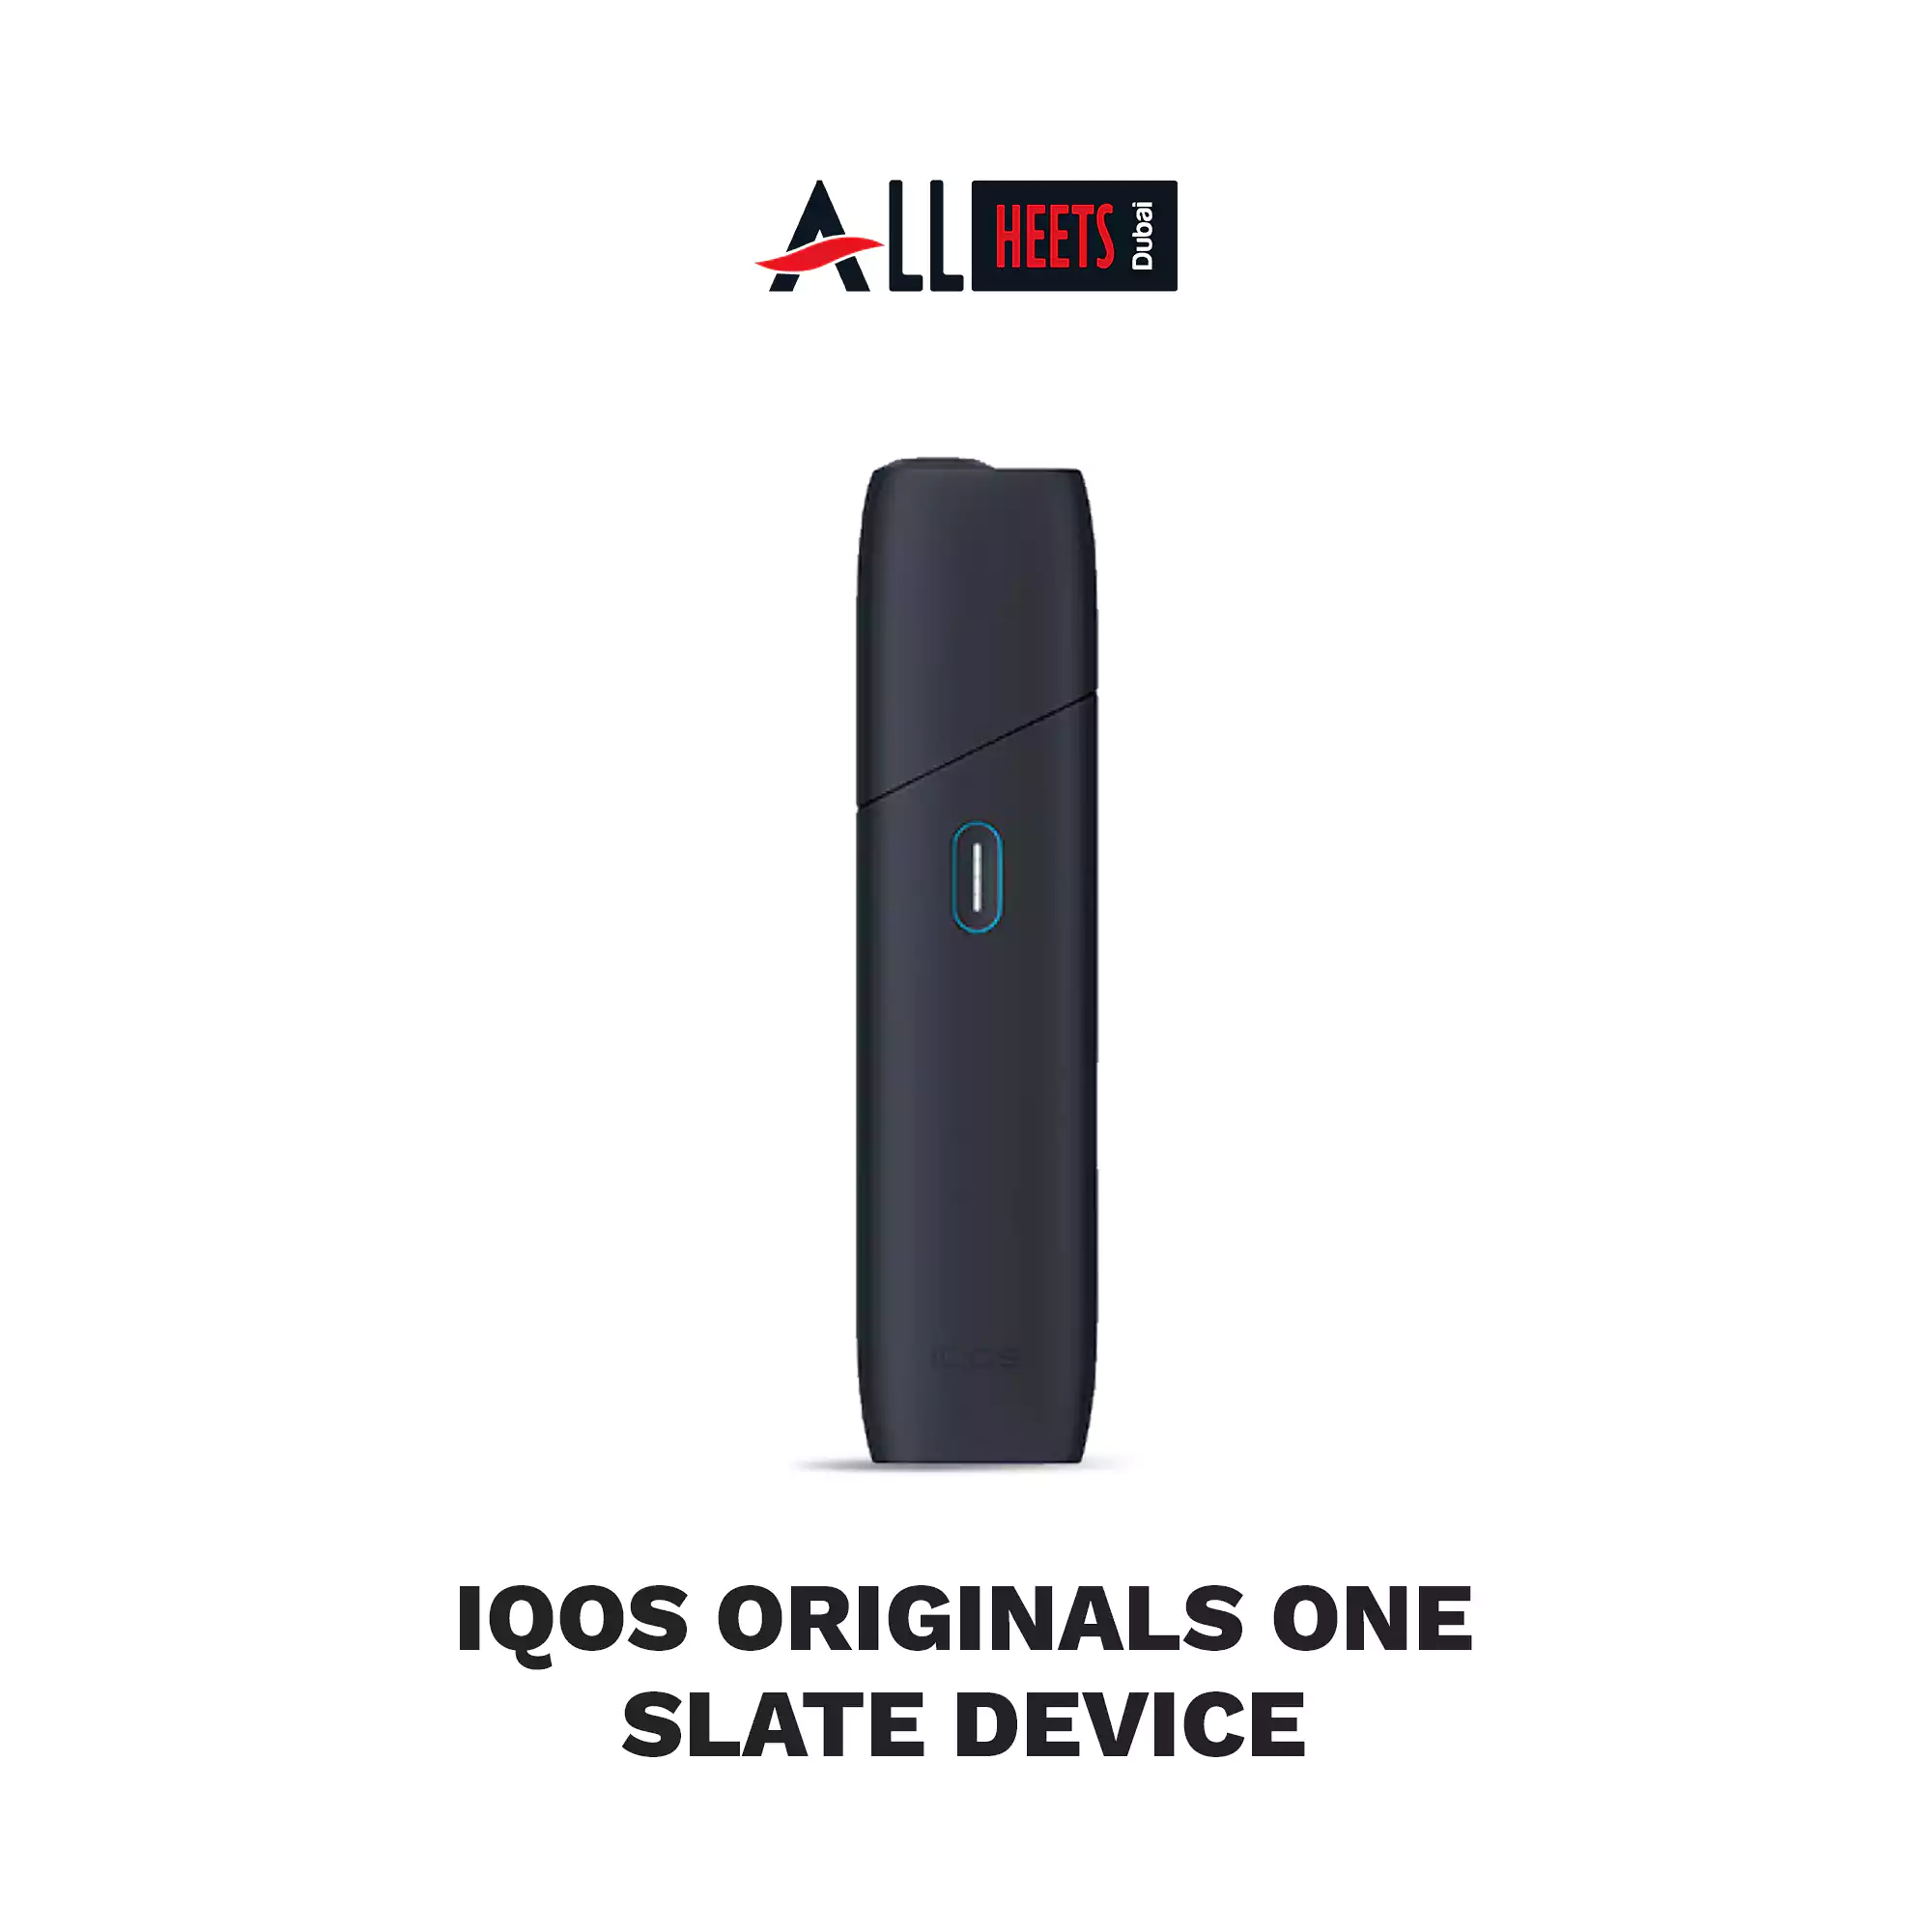 New IQOS Originals One Slate Device In Dubai